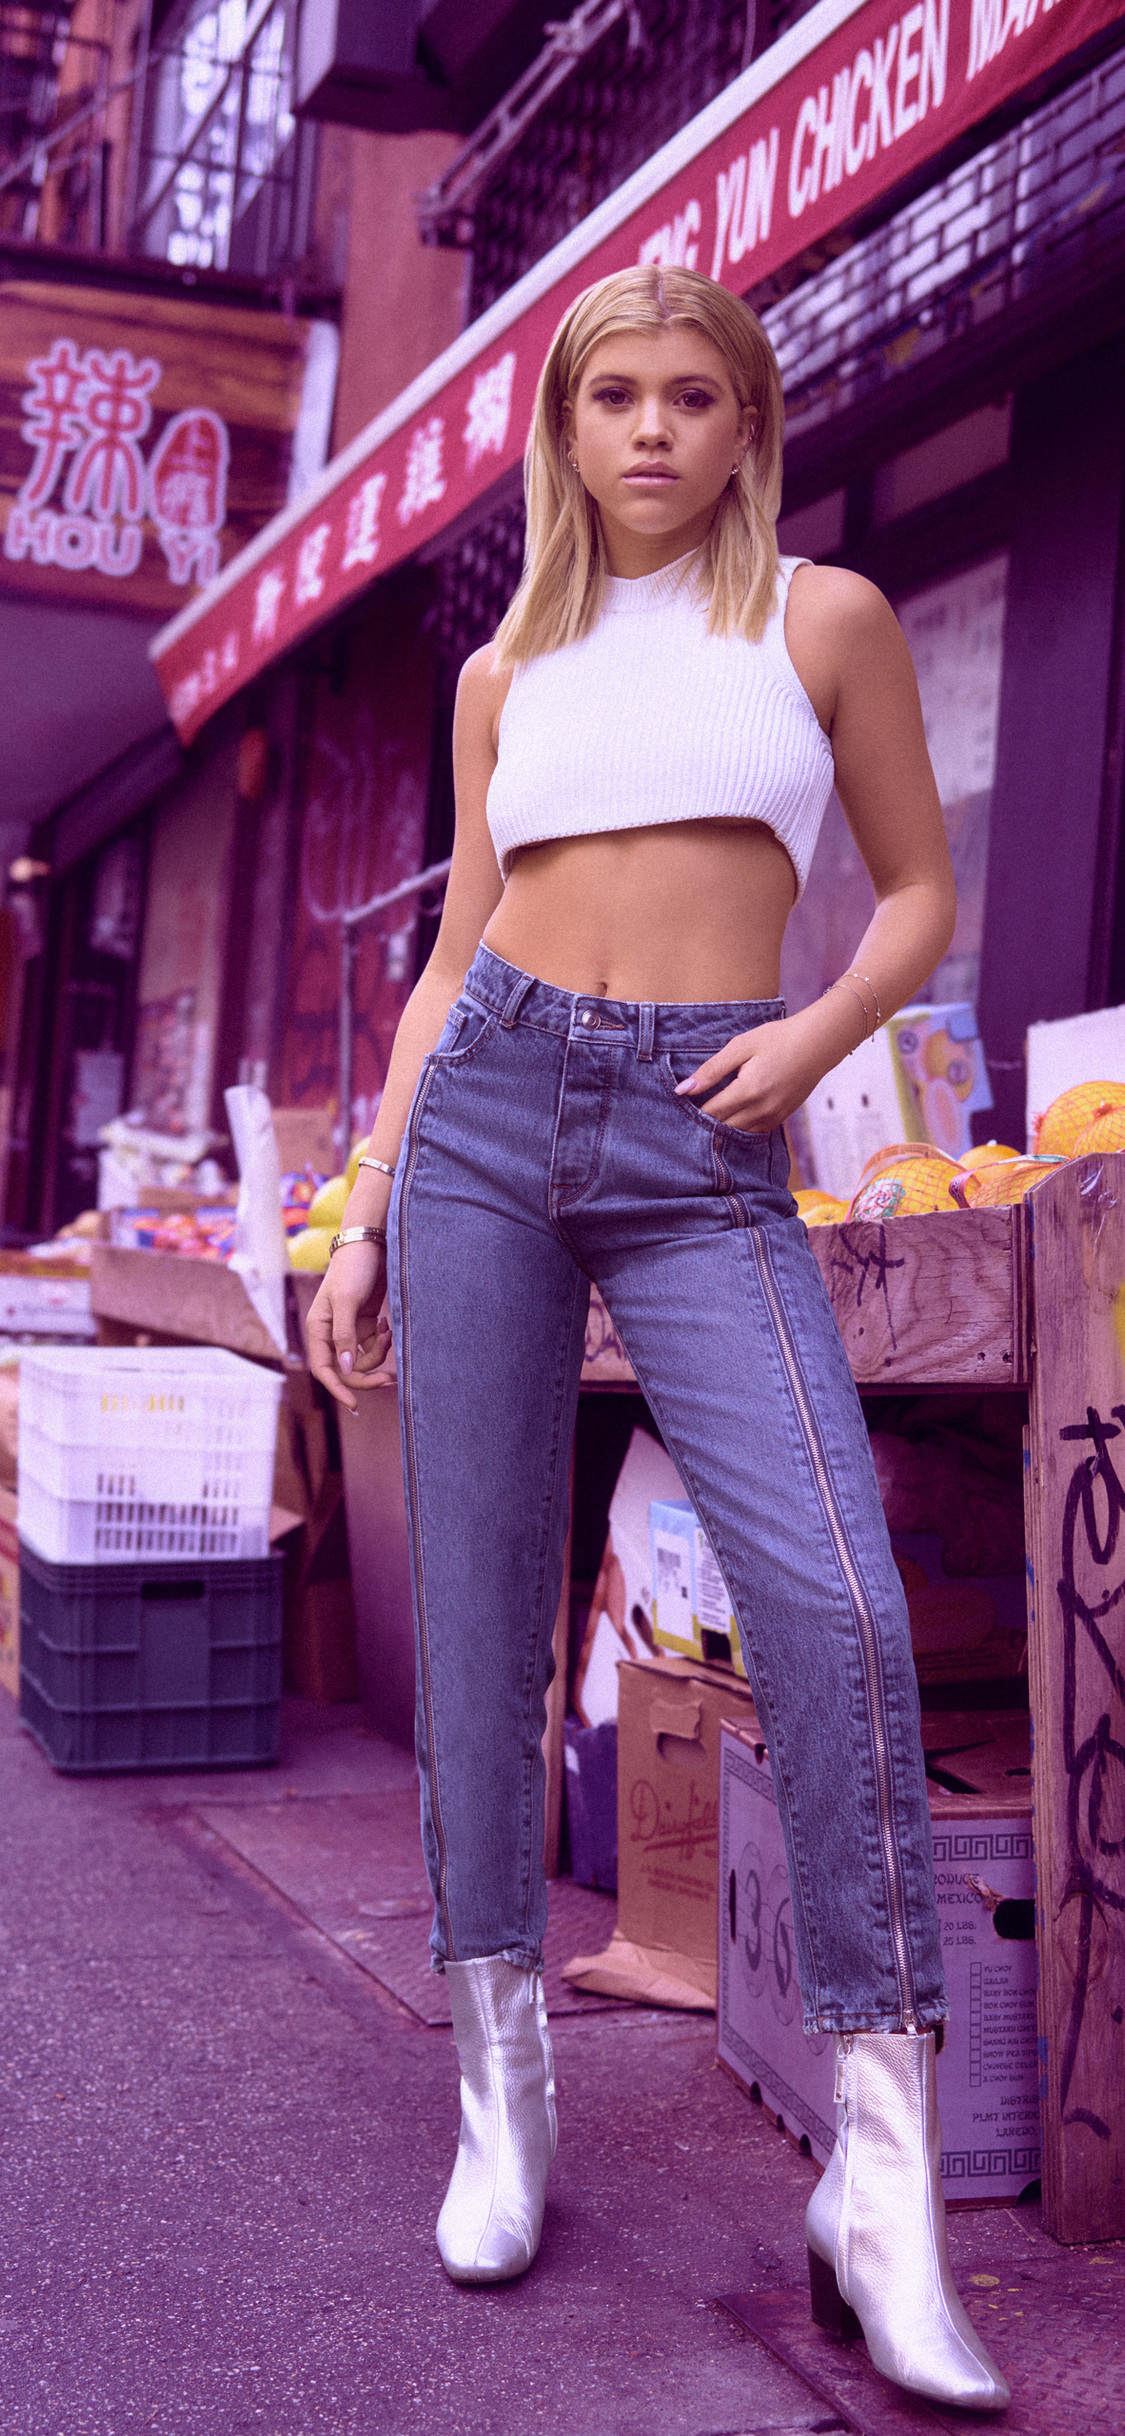 Sofia Richie Model Photoshoot 2018 Wallpapers